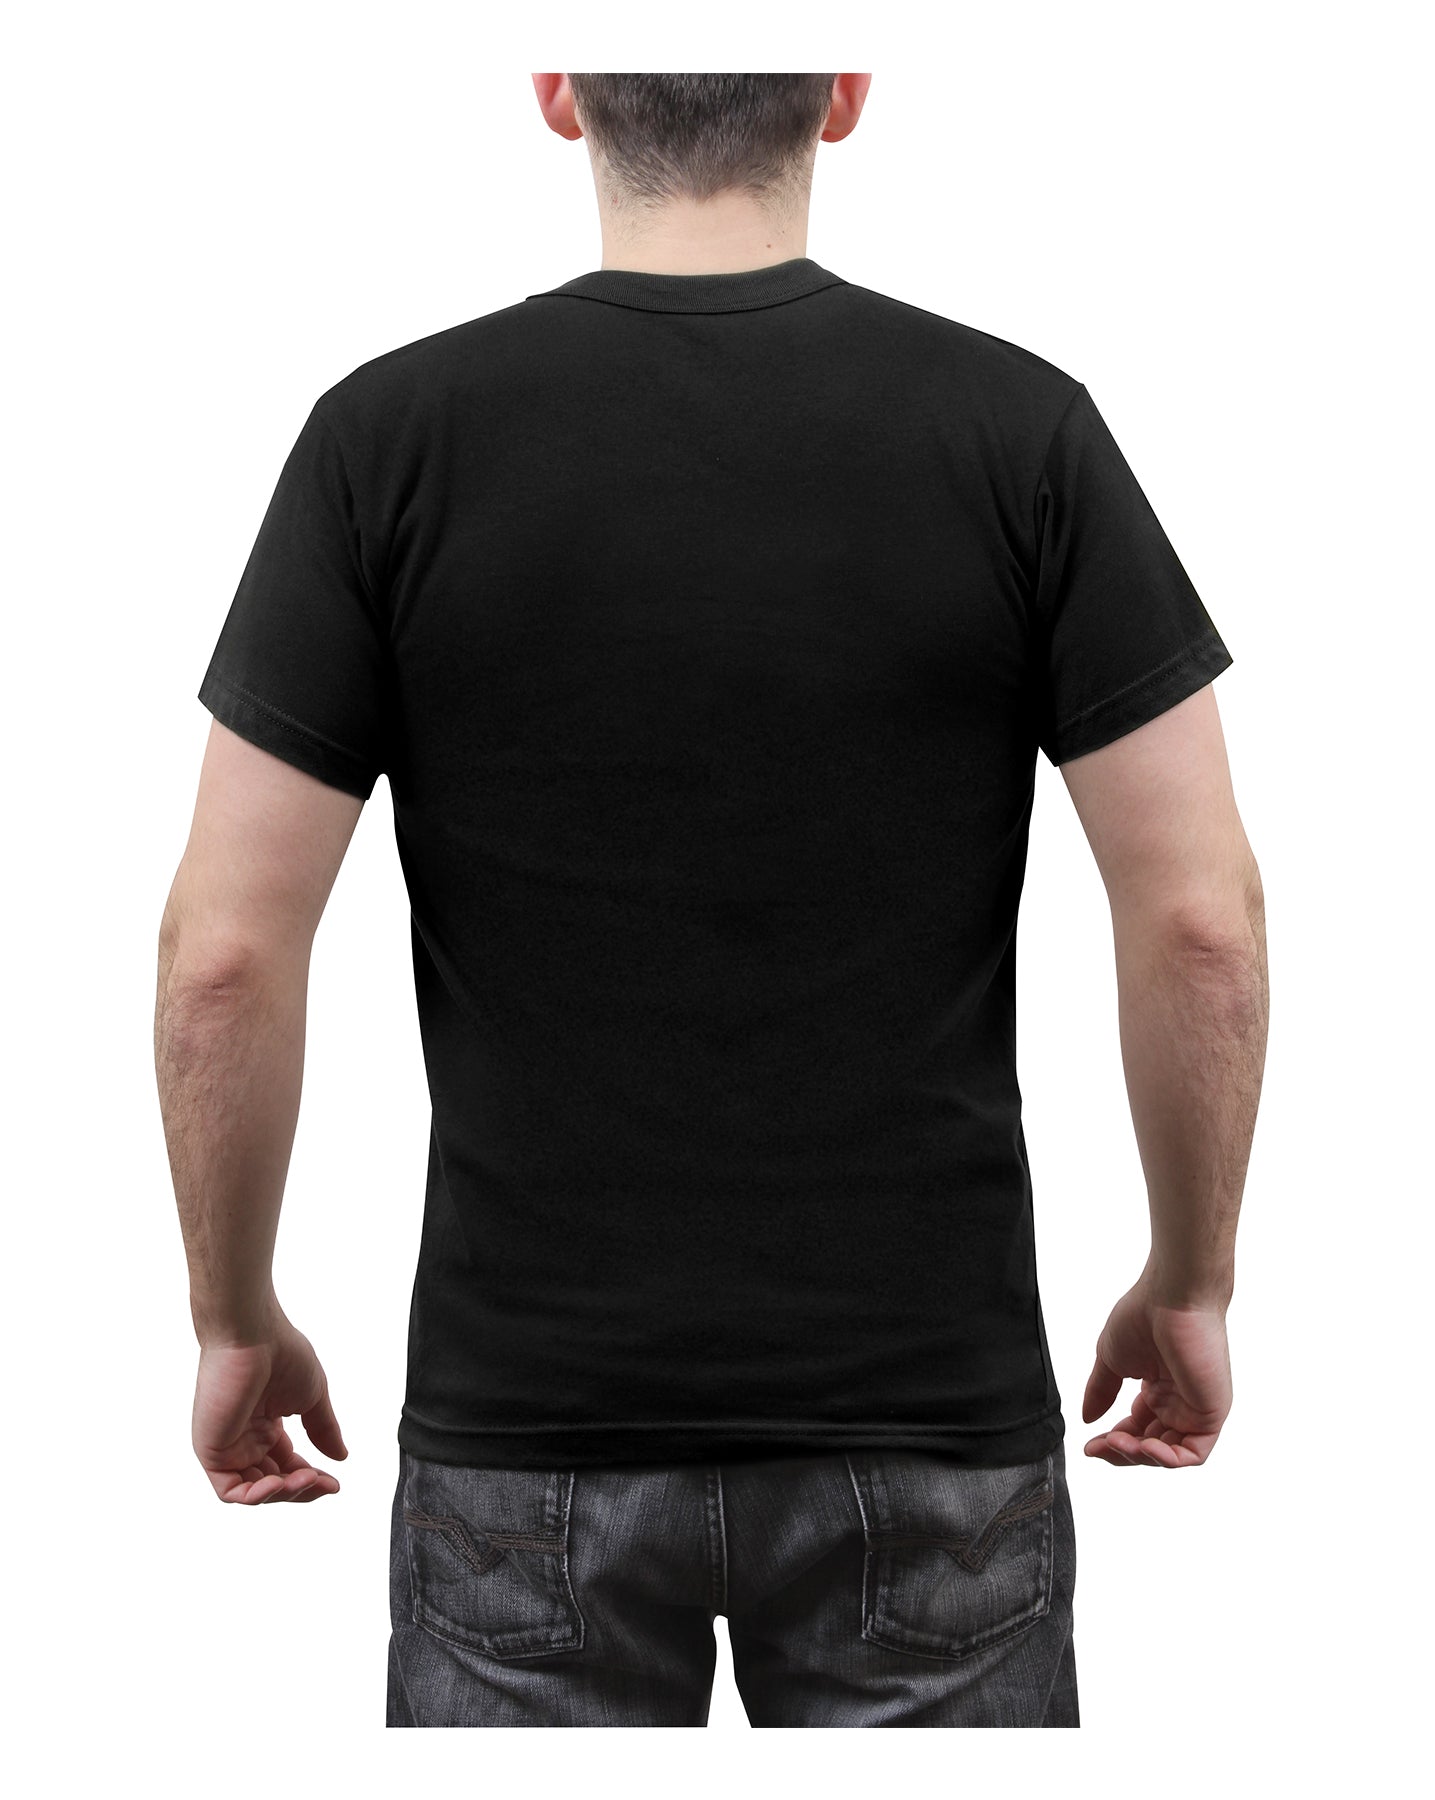 Men's Black Short Sleeve T-Shirt With Thin Green Line U.S Flag